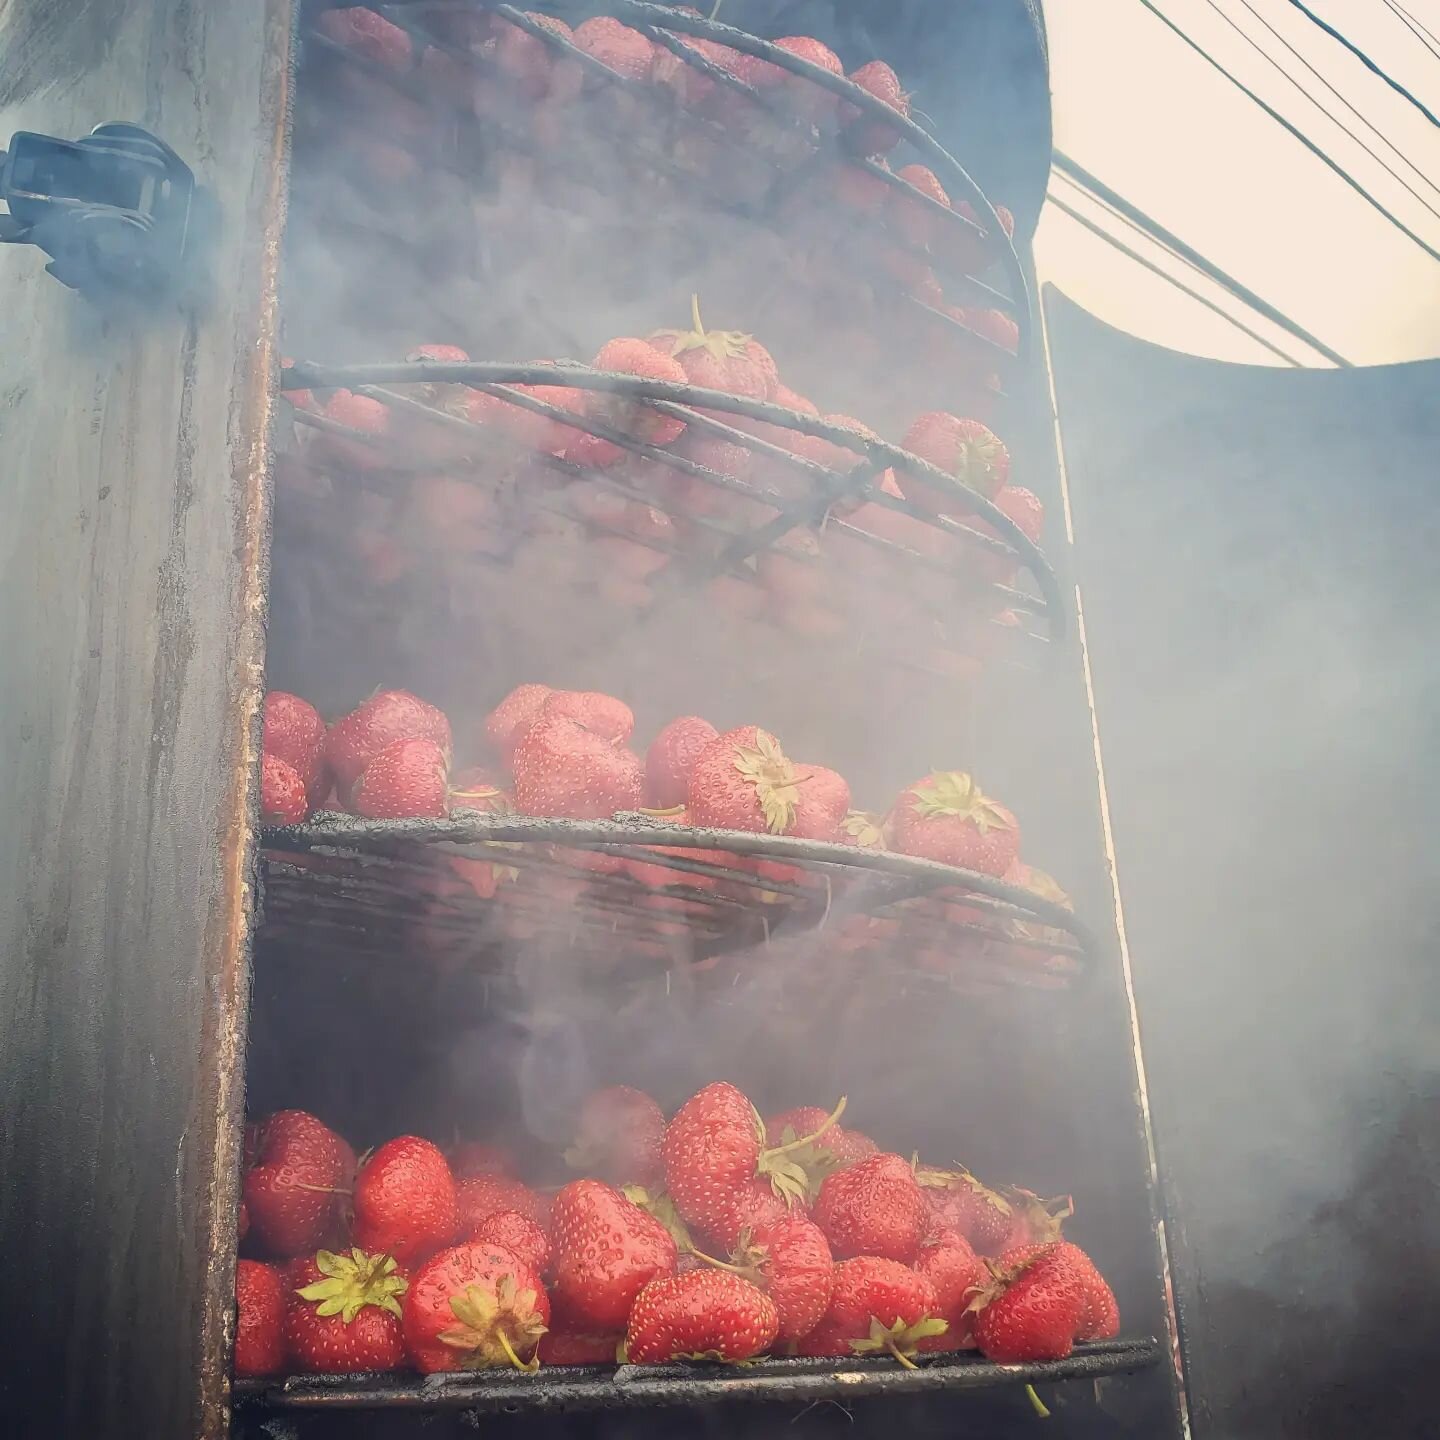 Smoked Strawberry BBQ coming soon! Strawberries courtesy of @thefarmsteadmarket . 

#crafthotsauce #smallbatch #local #localhotsauce #handmade #eatlocal #eat614 #eatlocalColumbus #columbusfood #columbusfoodie